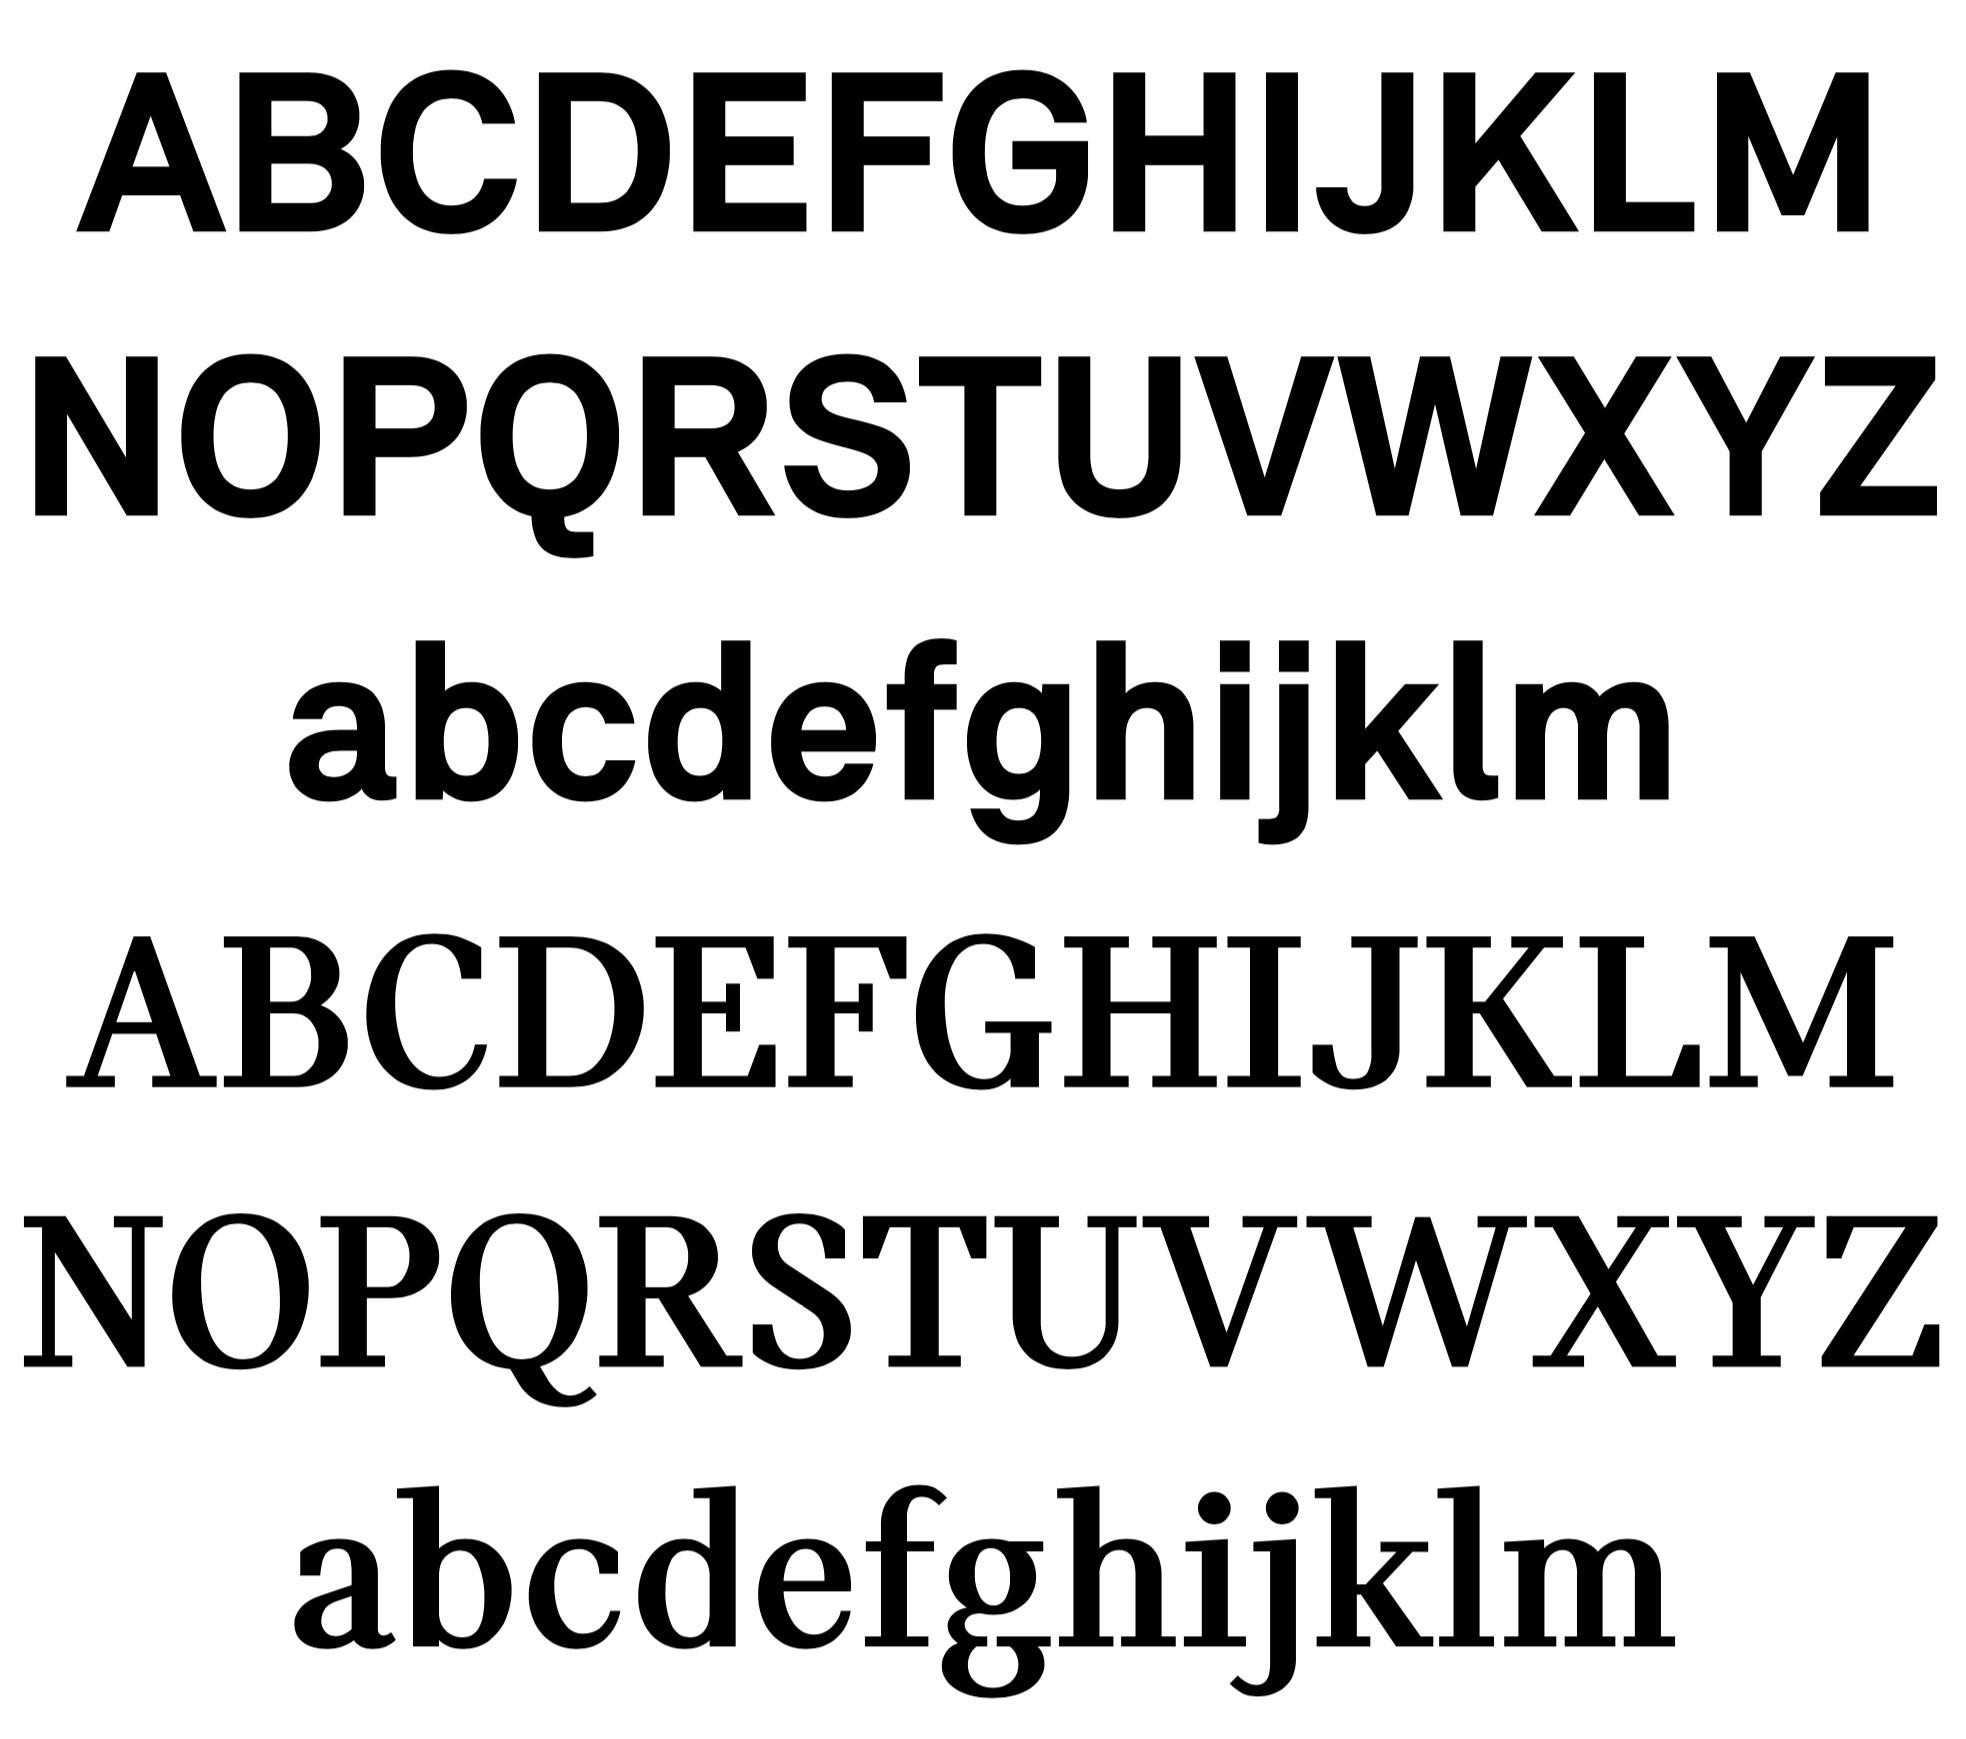 mini-serif-sans-serif-font-list-entries-typography-guru